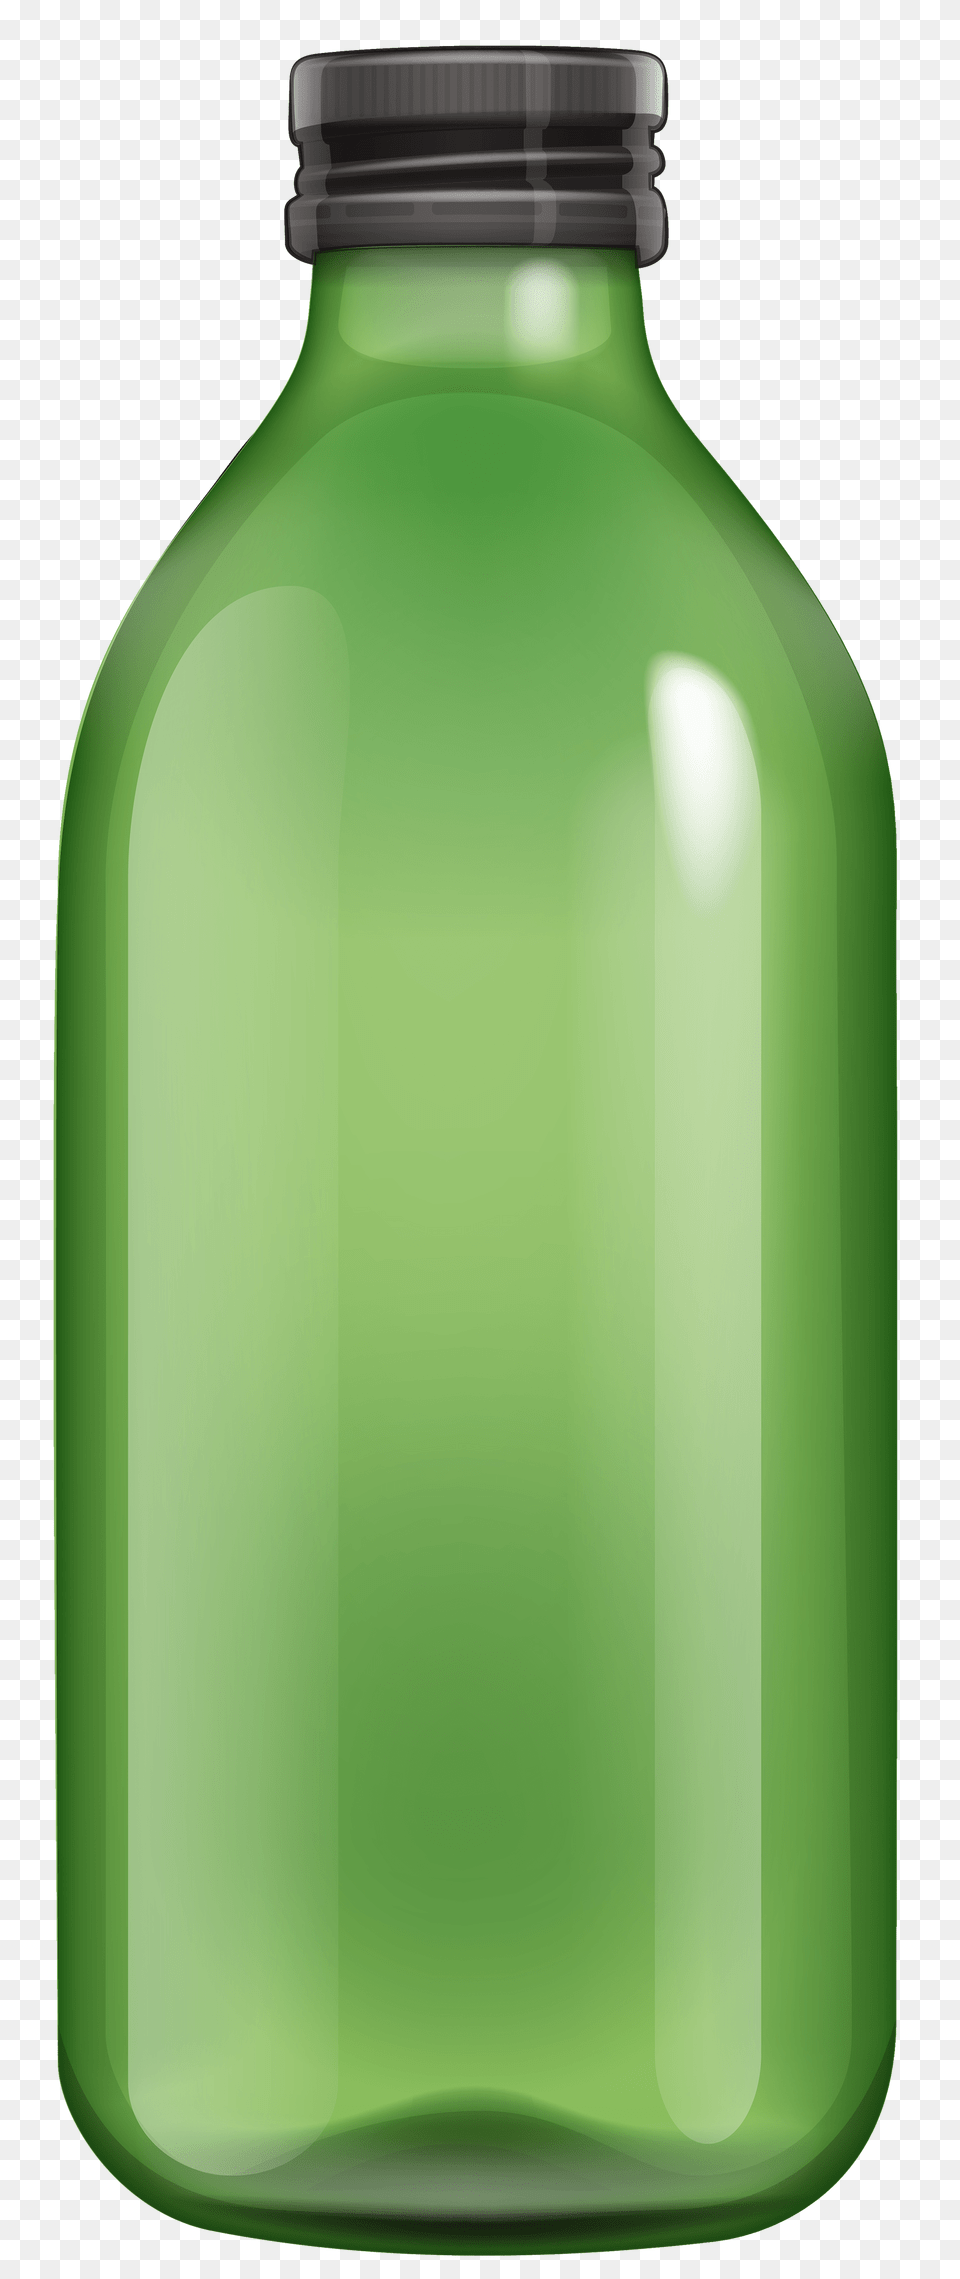 Meaning Of Signs In Plastic Bottles, Bottle, Green, Jar, Shaker Png